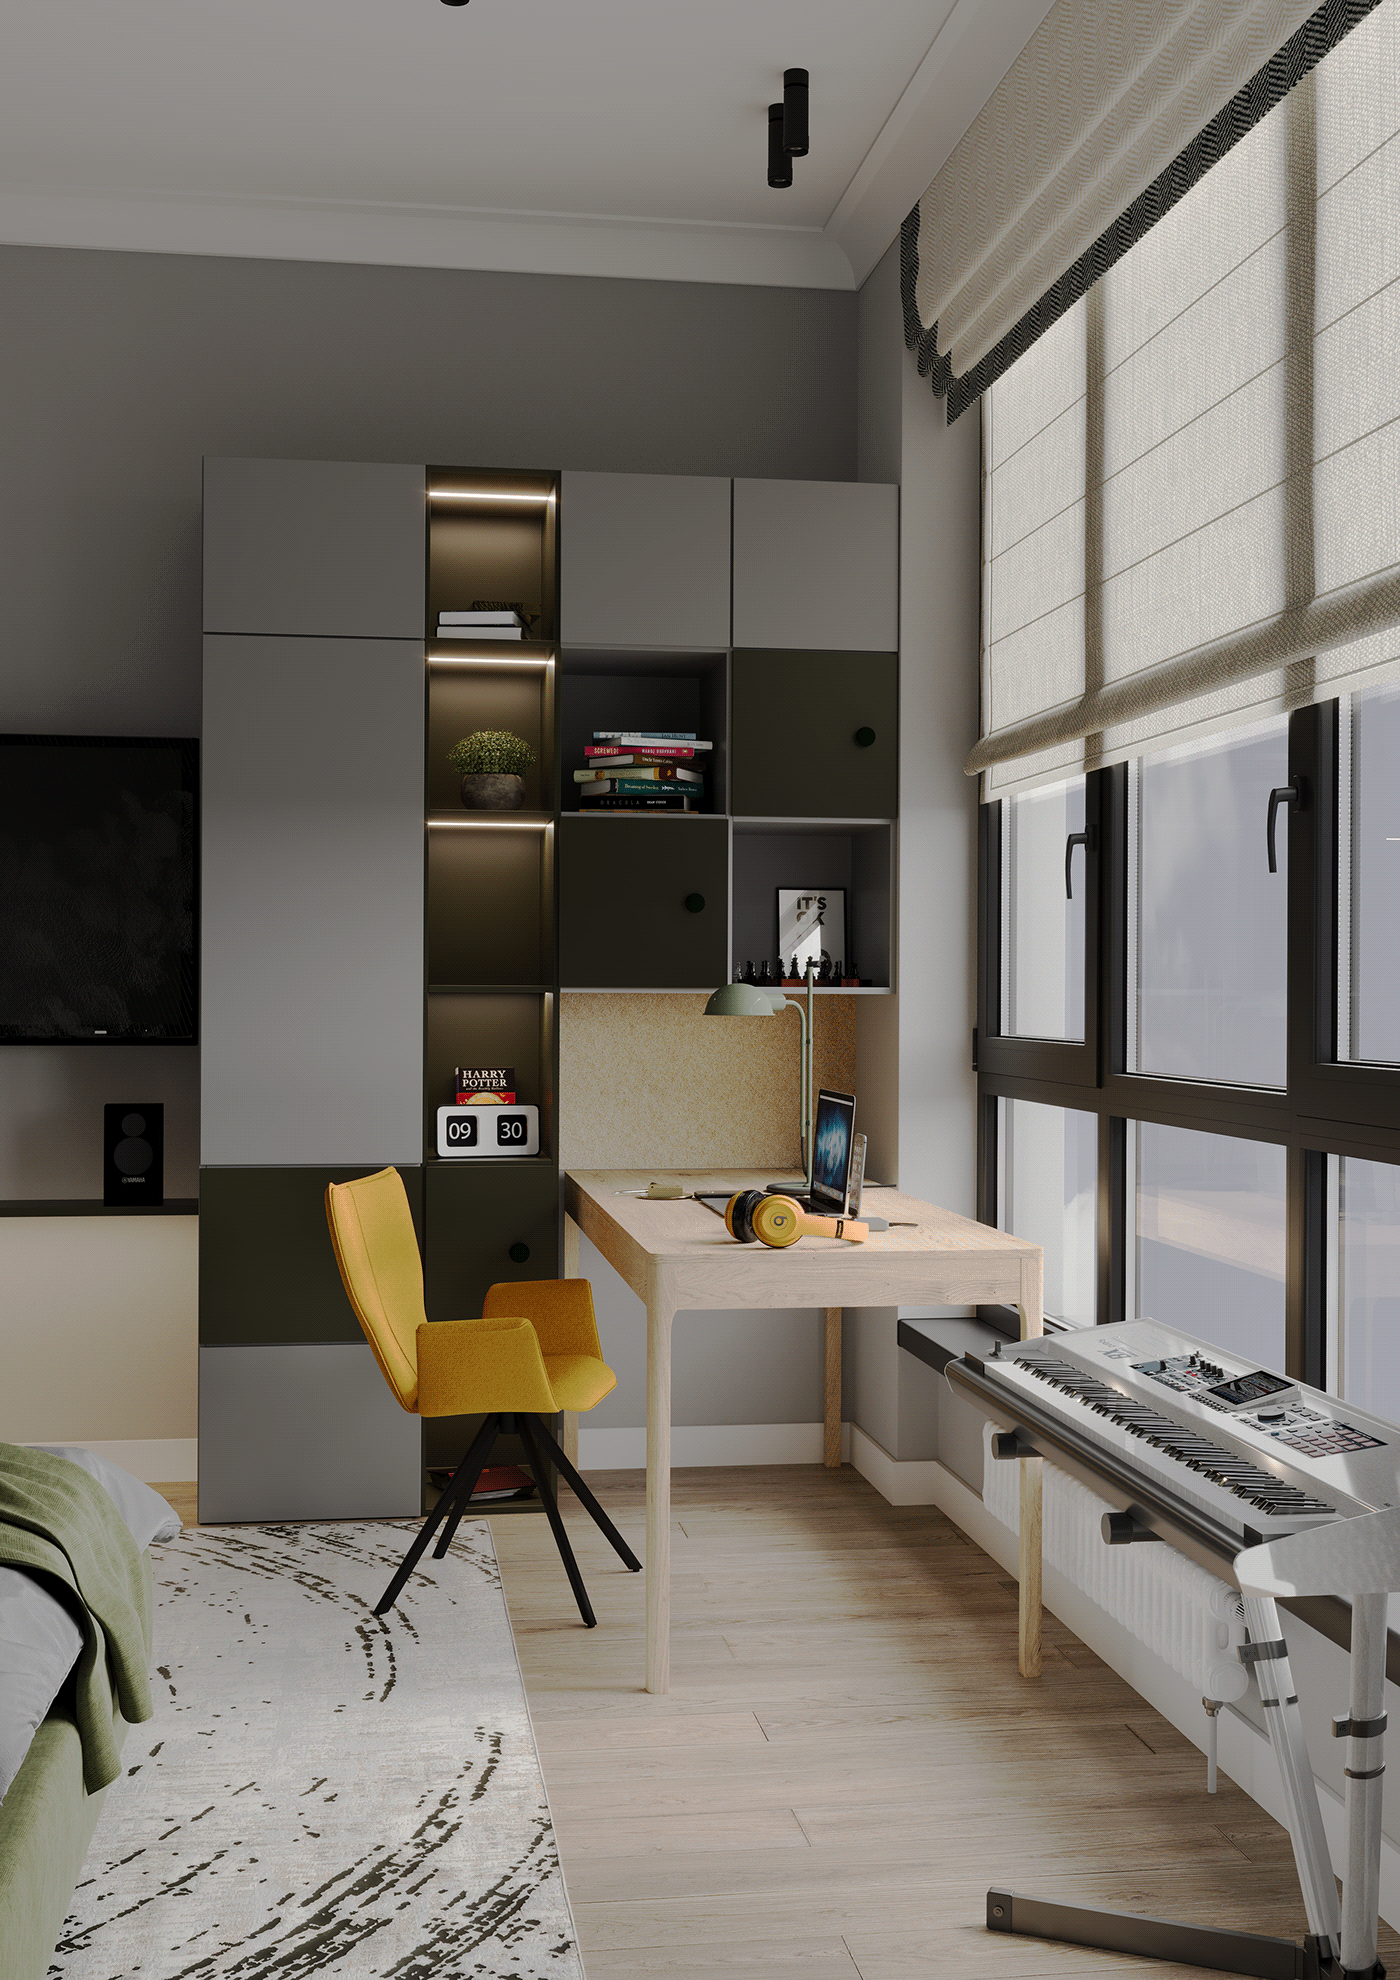 3ds max visualization interior design  archviz Render детская дизайн интерьера Визуализация интерьера Интерьер квартиры современный дизайн